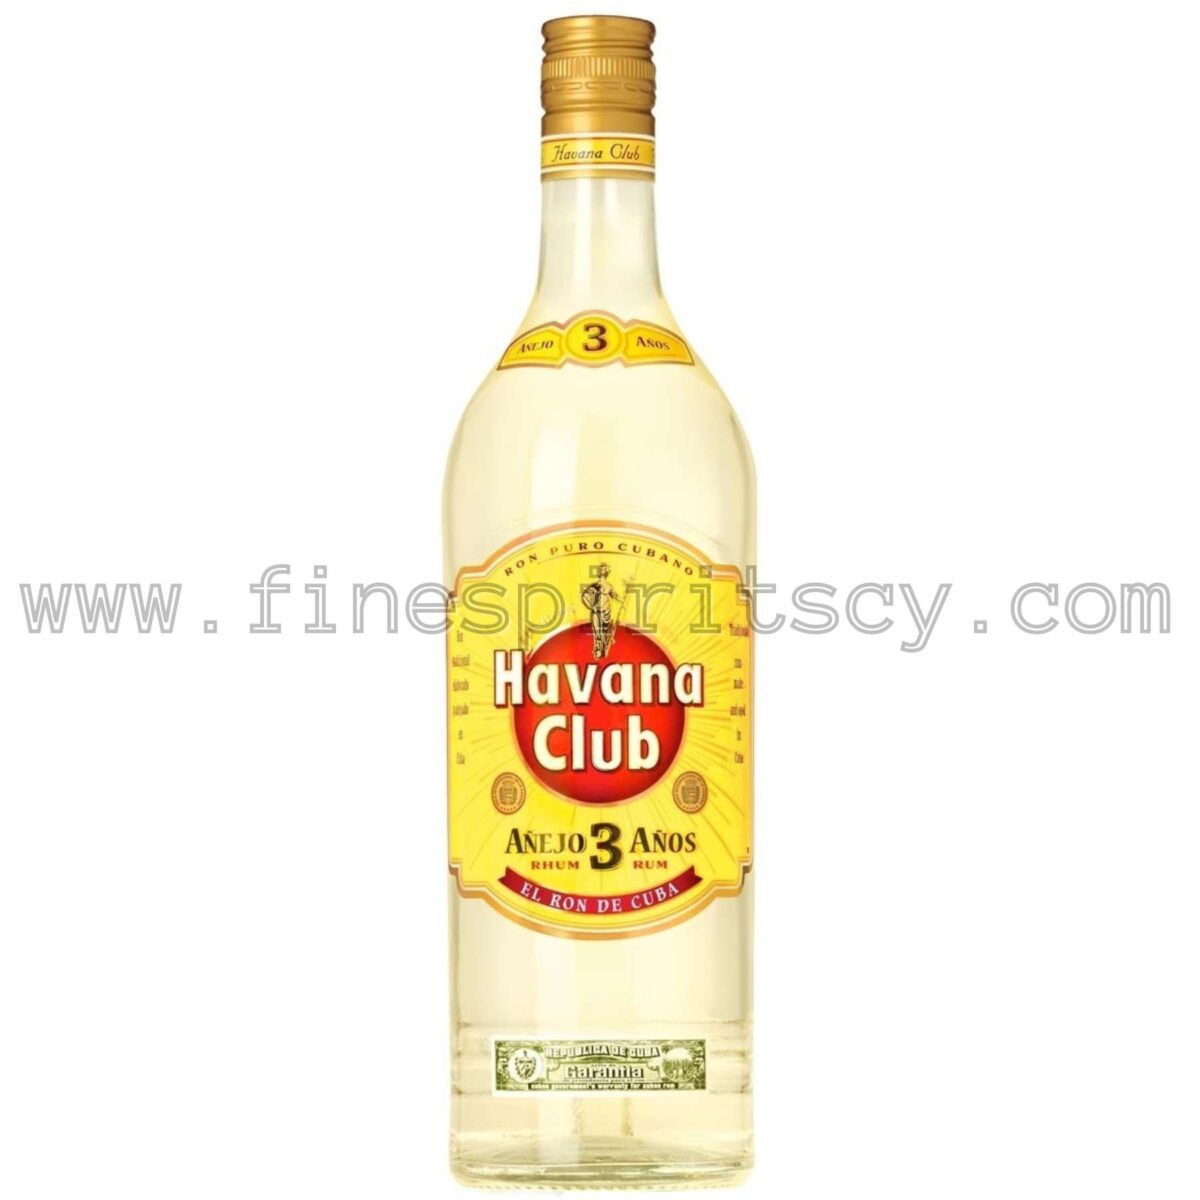 Havana Club 3 Year Old Rum Anejo 3 Anos Cuba Cyprus Price FSCY 1000ml 100cl 1l liter litre